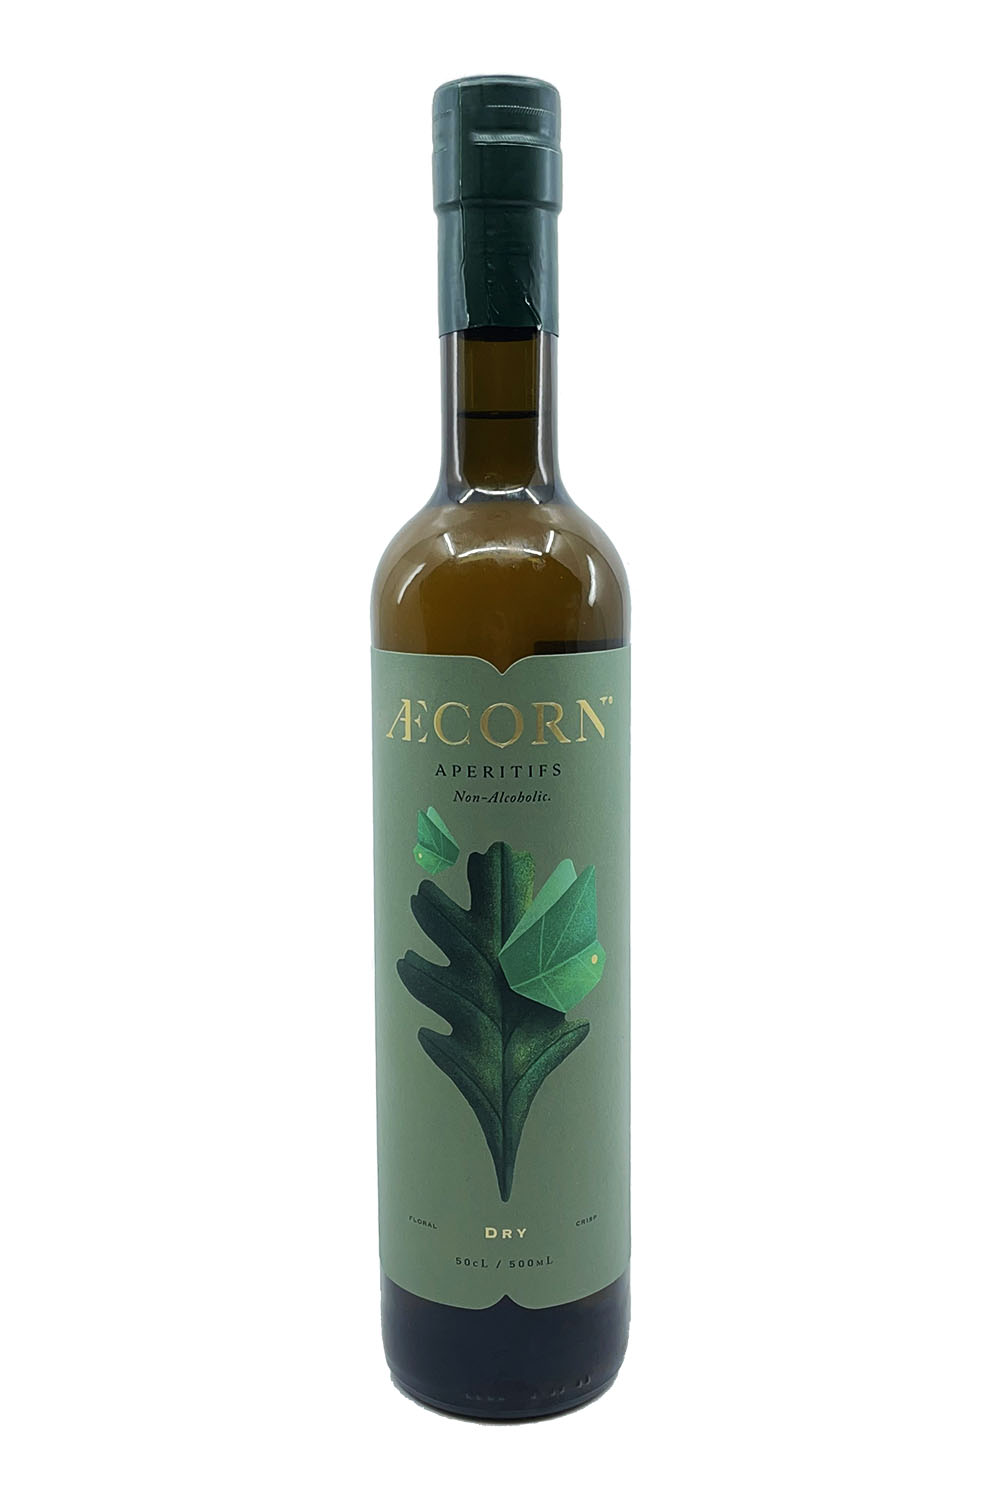 Seedlip Æcorn Aecorn Dry alkoholfreier Aperitif 0,5l